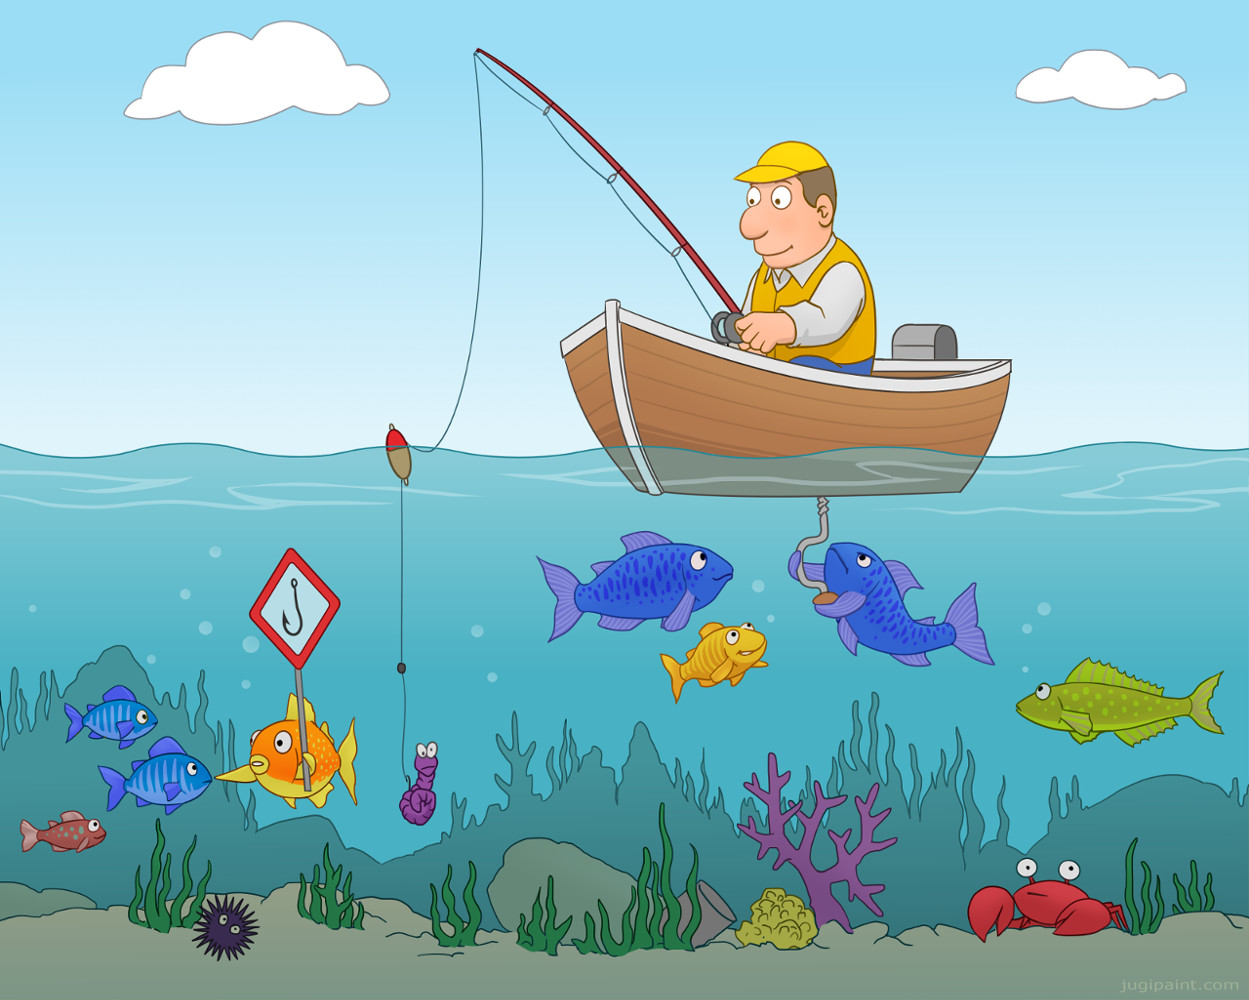 He can catch. День рыбака. Открытки с днём рыбака. Рыбак ловит рыбу. Рисунок на тему рыбалка.